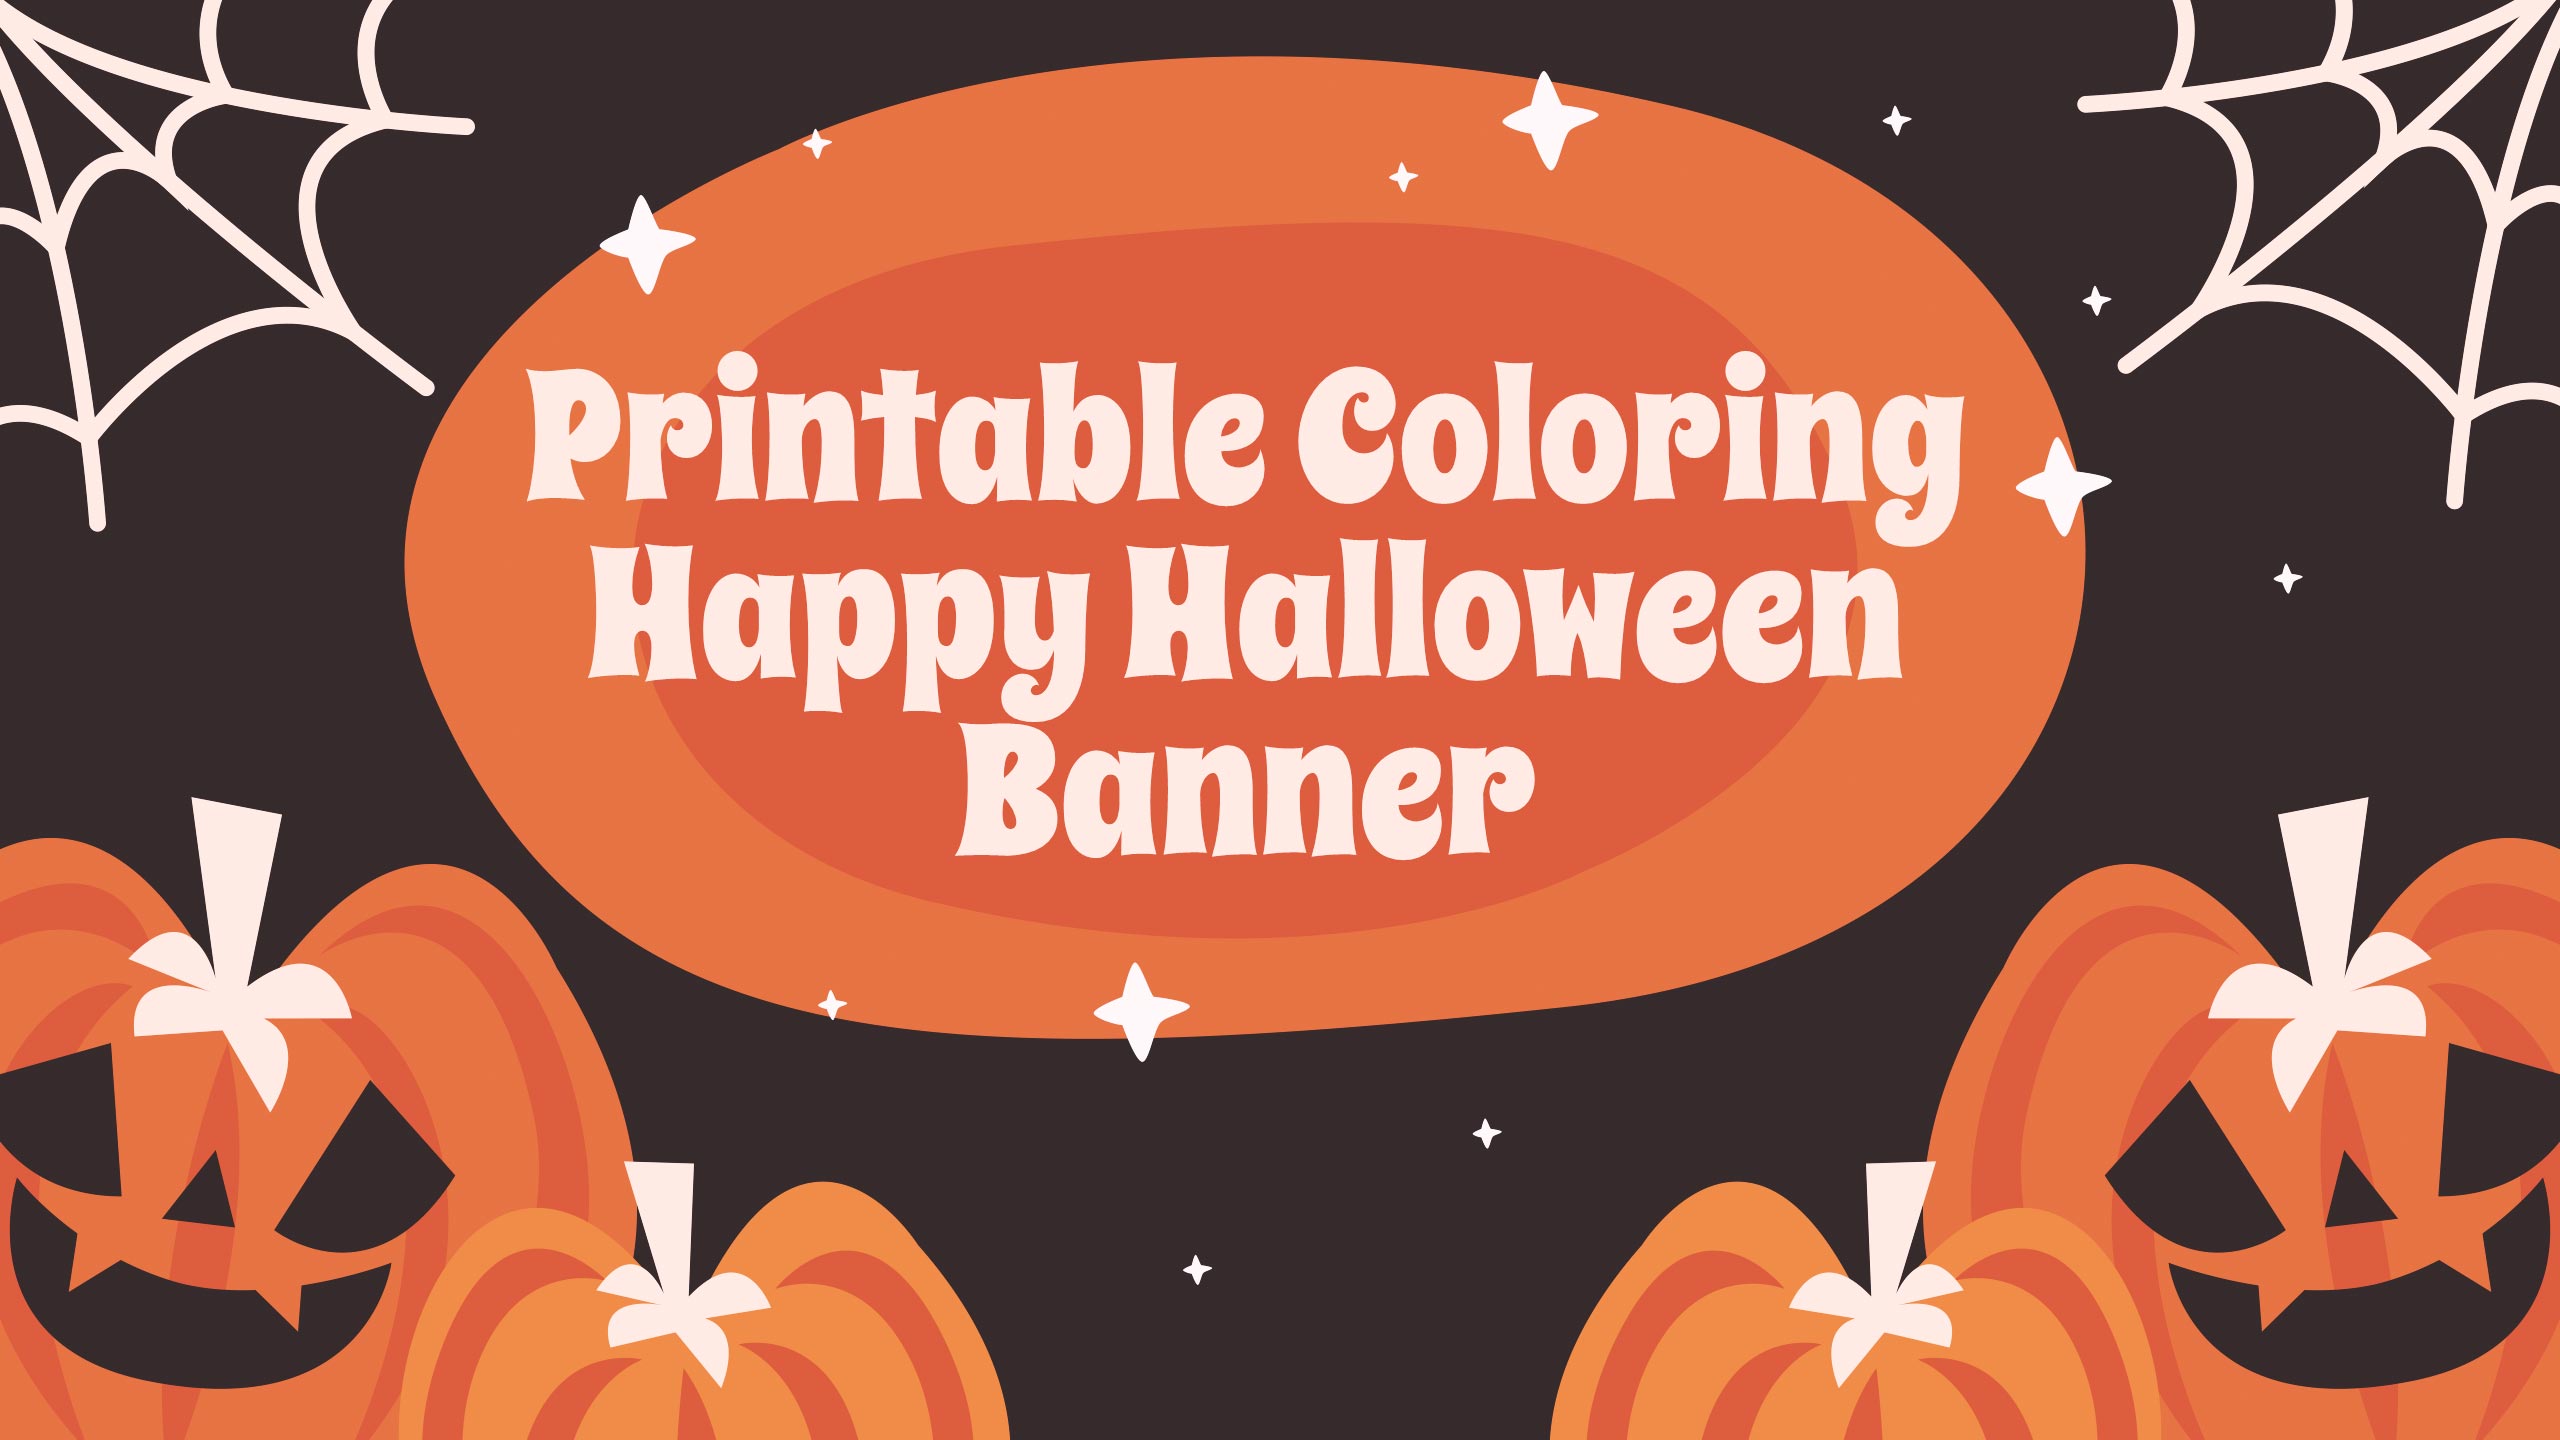 Printable Coloring Happy Halloween Banner